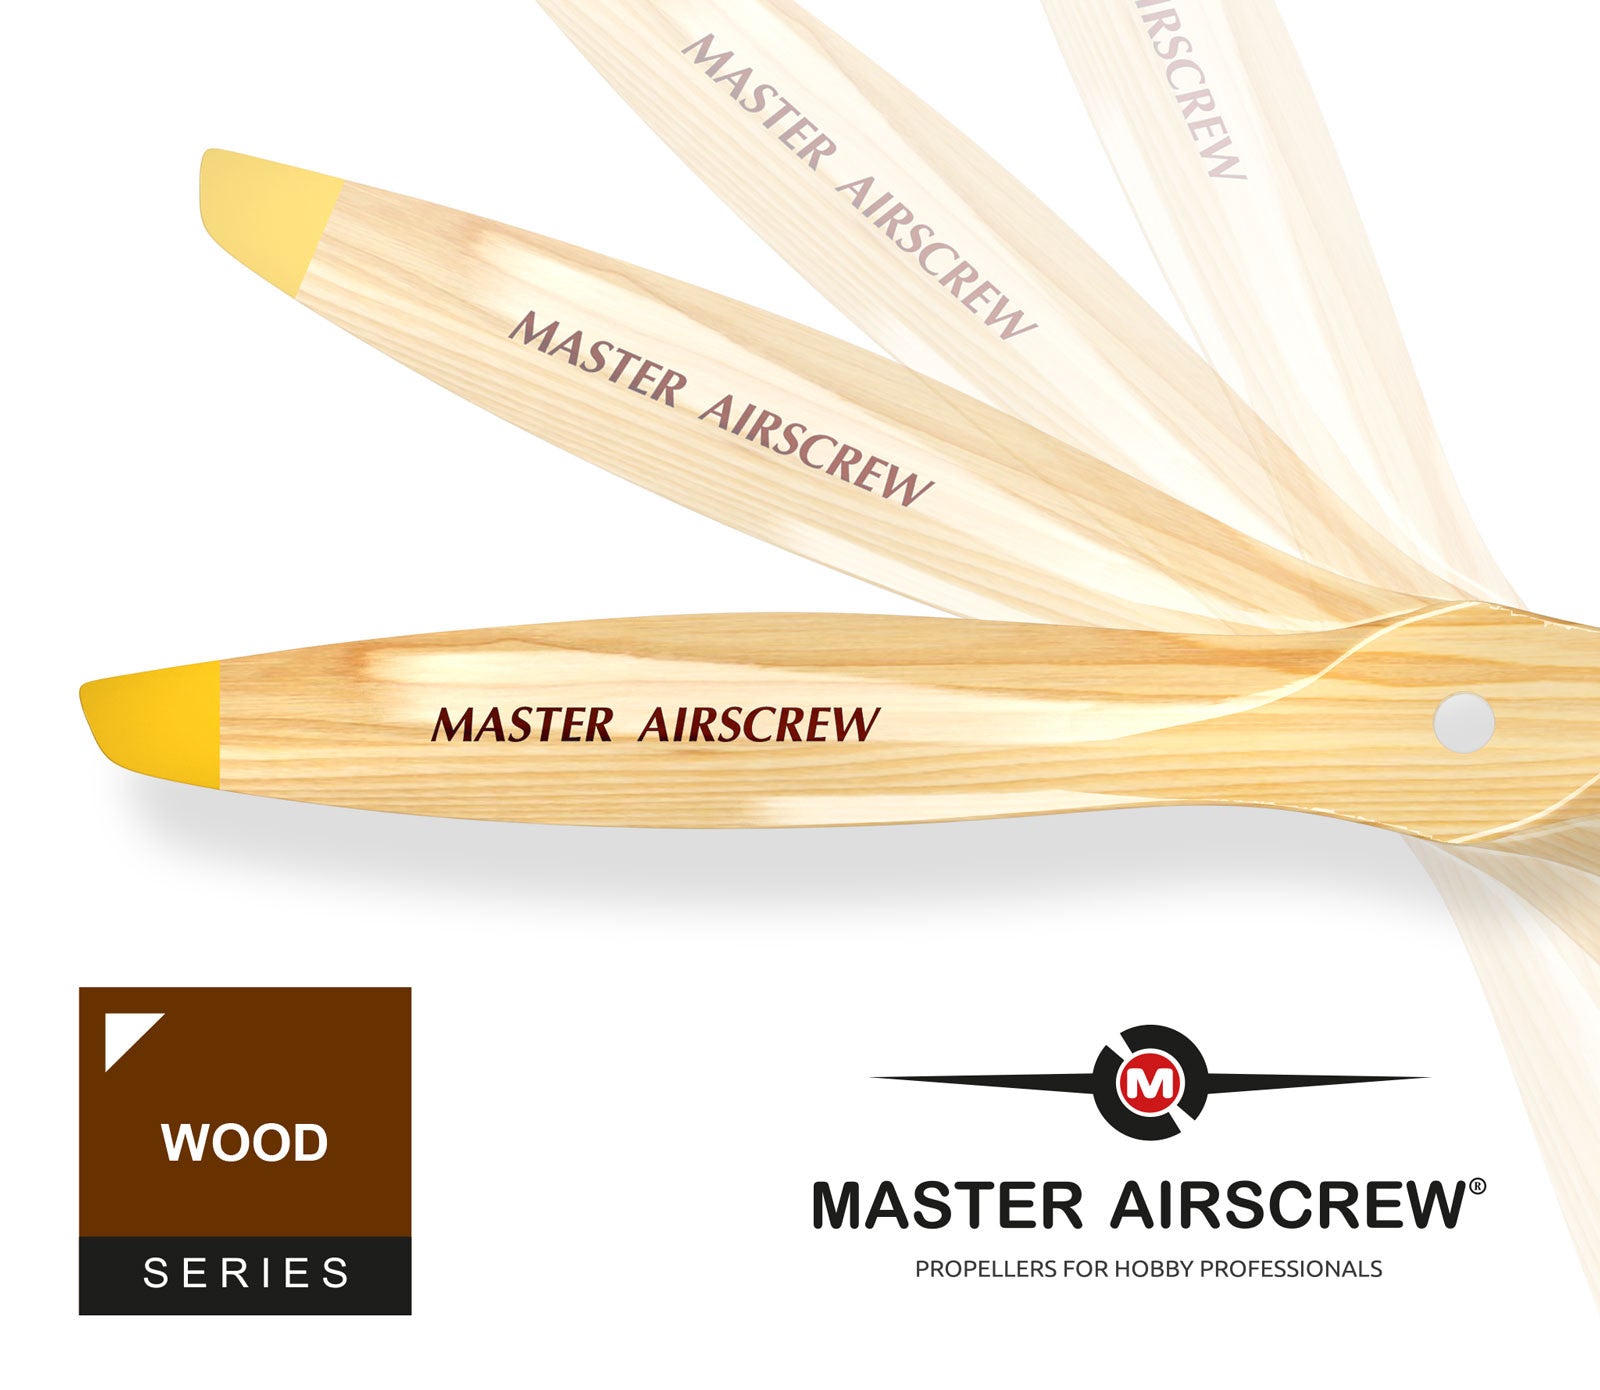 Wood-Maple - 24x10 Propeller - Master Airscrew